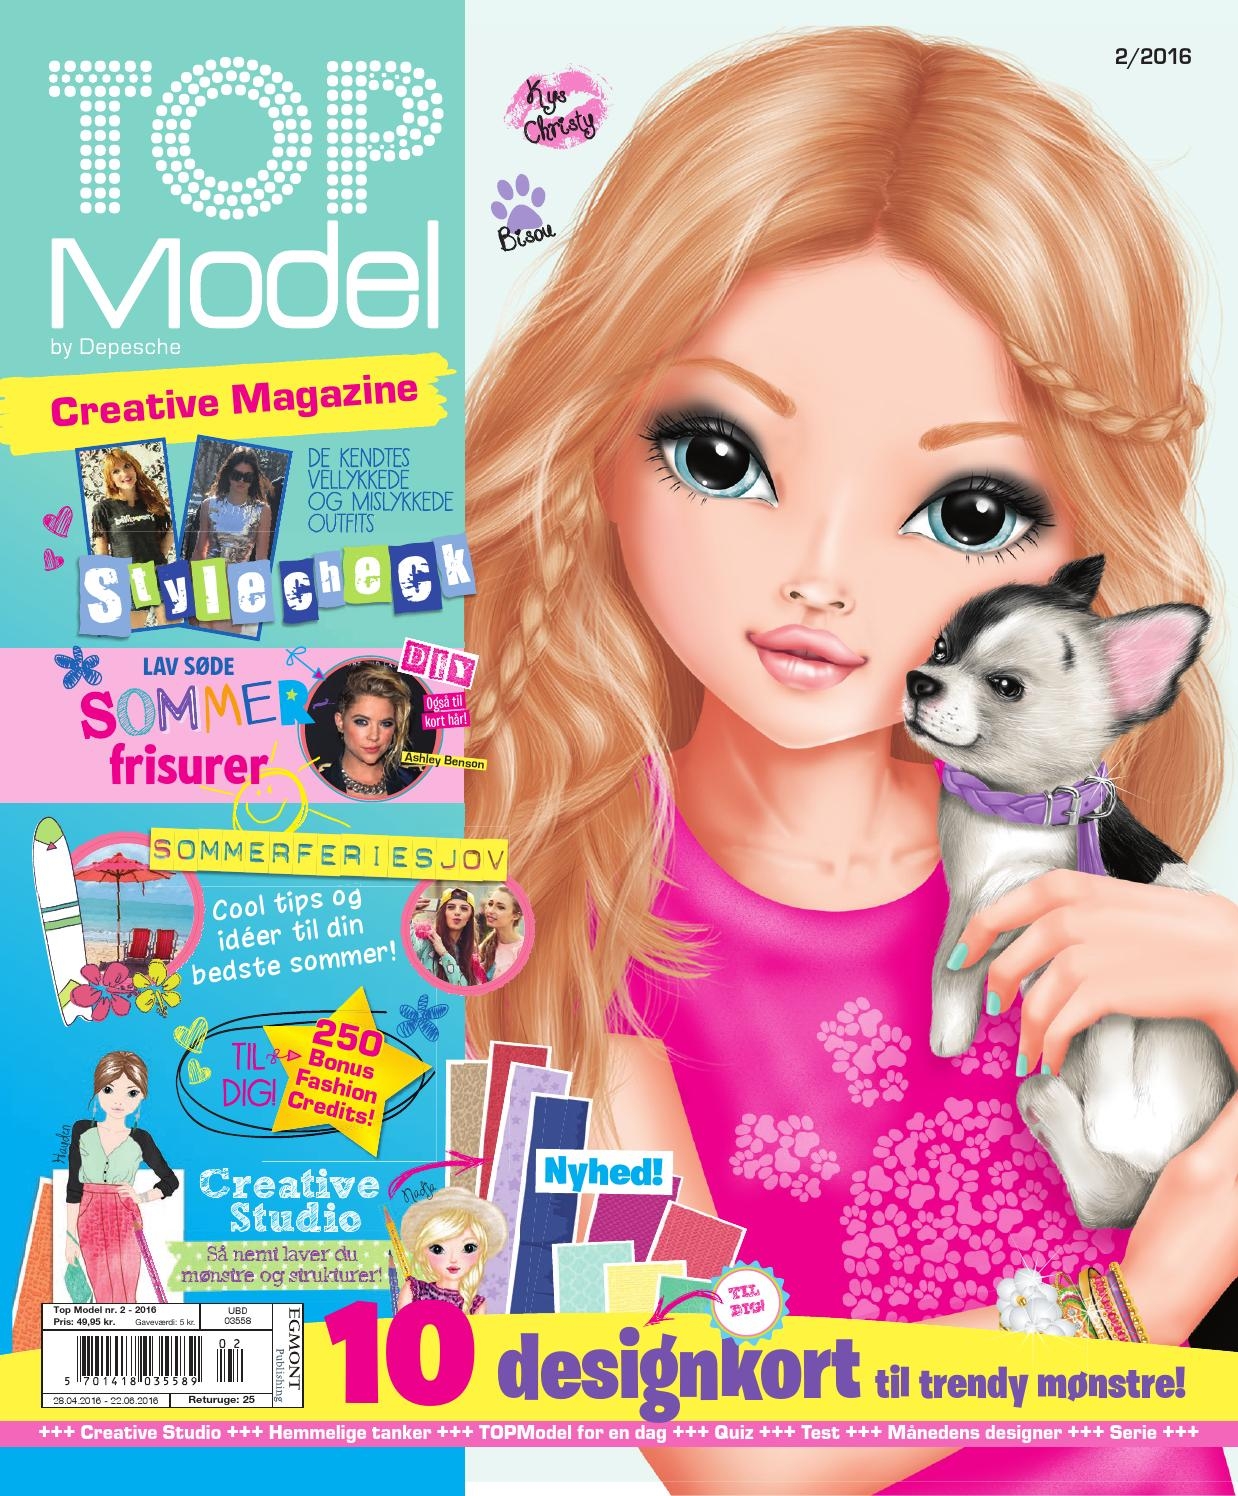 Top magazine. Top model by Depeche Дженни. Журнал топ модели. Топ модель из детского журнала. Топ-модель журнал для девочек.